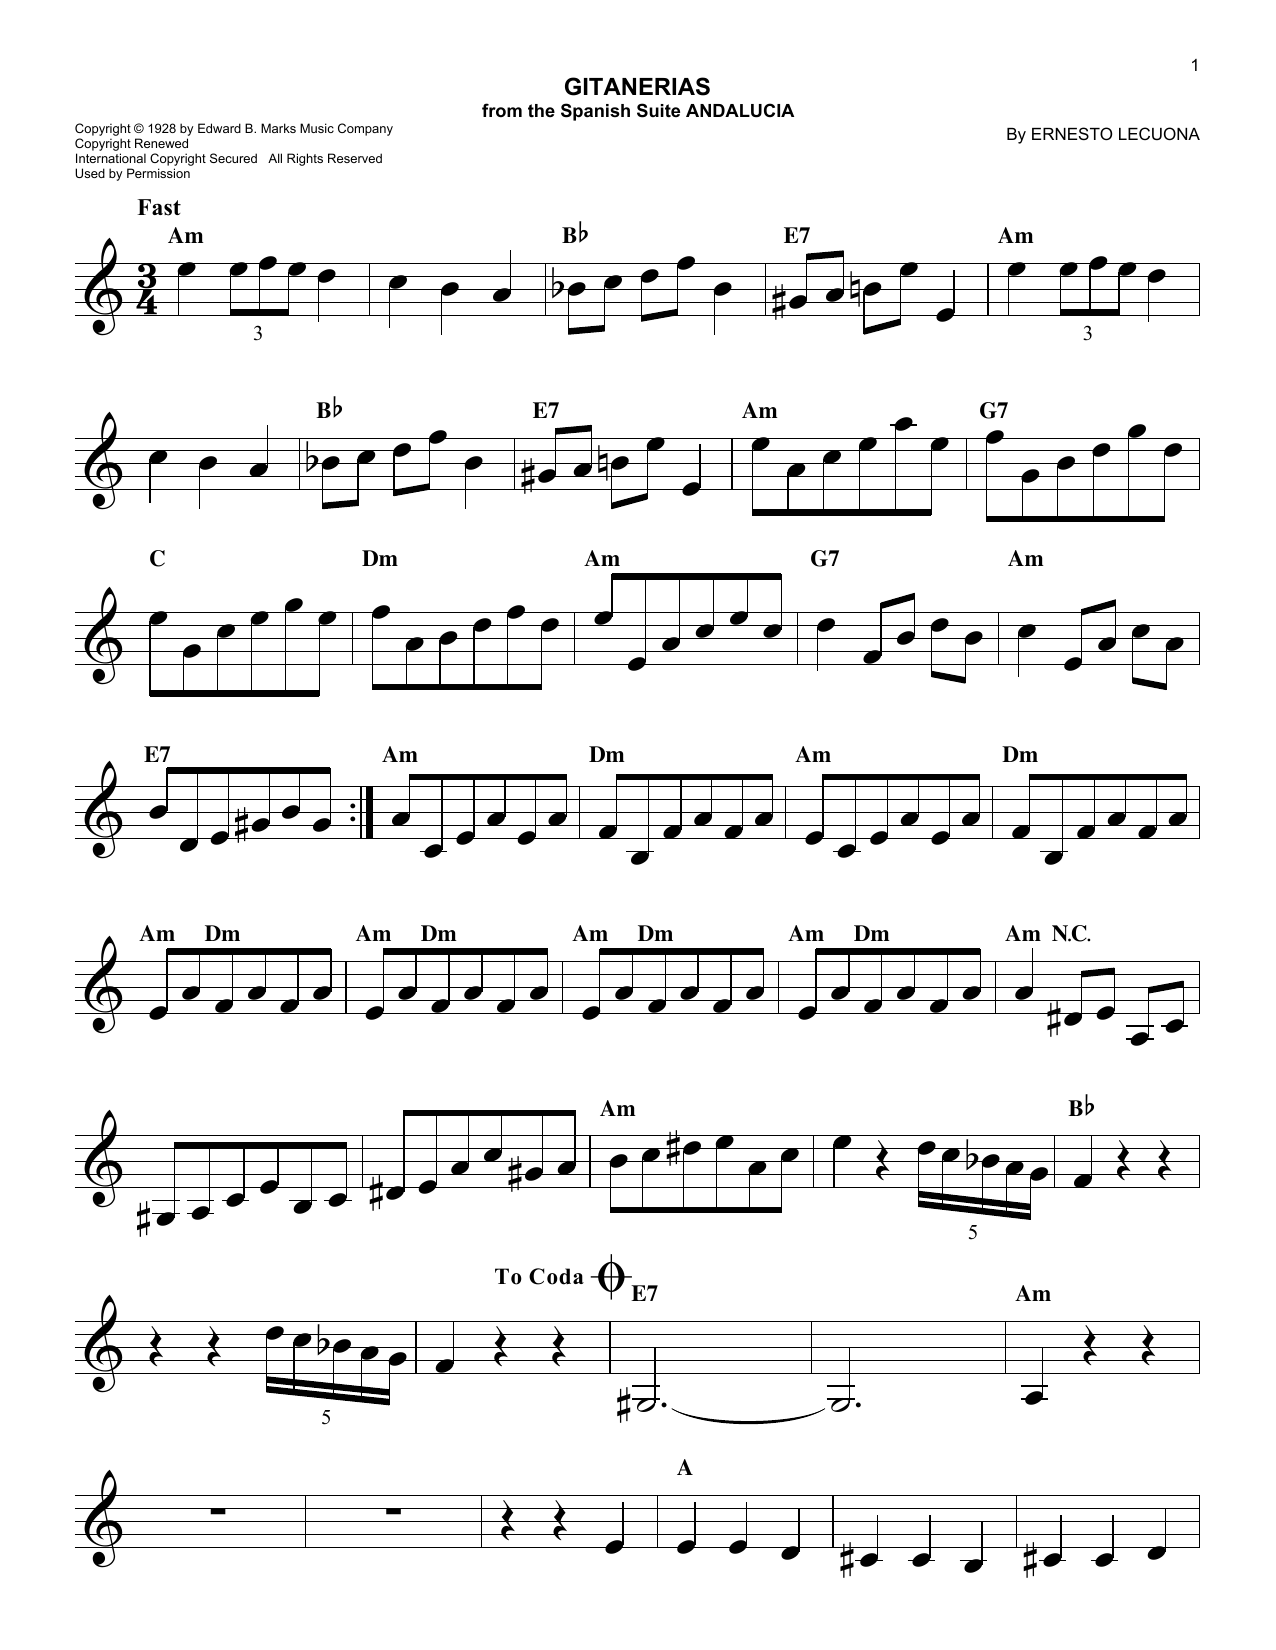 Ernesto Lecuona Gitanerias Sheet Music Notes & Chords for Piano Solo - Download or Print PDF